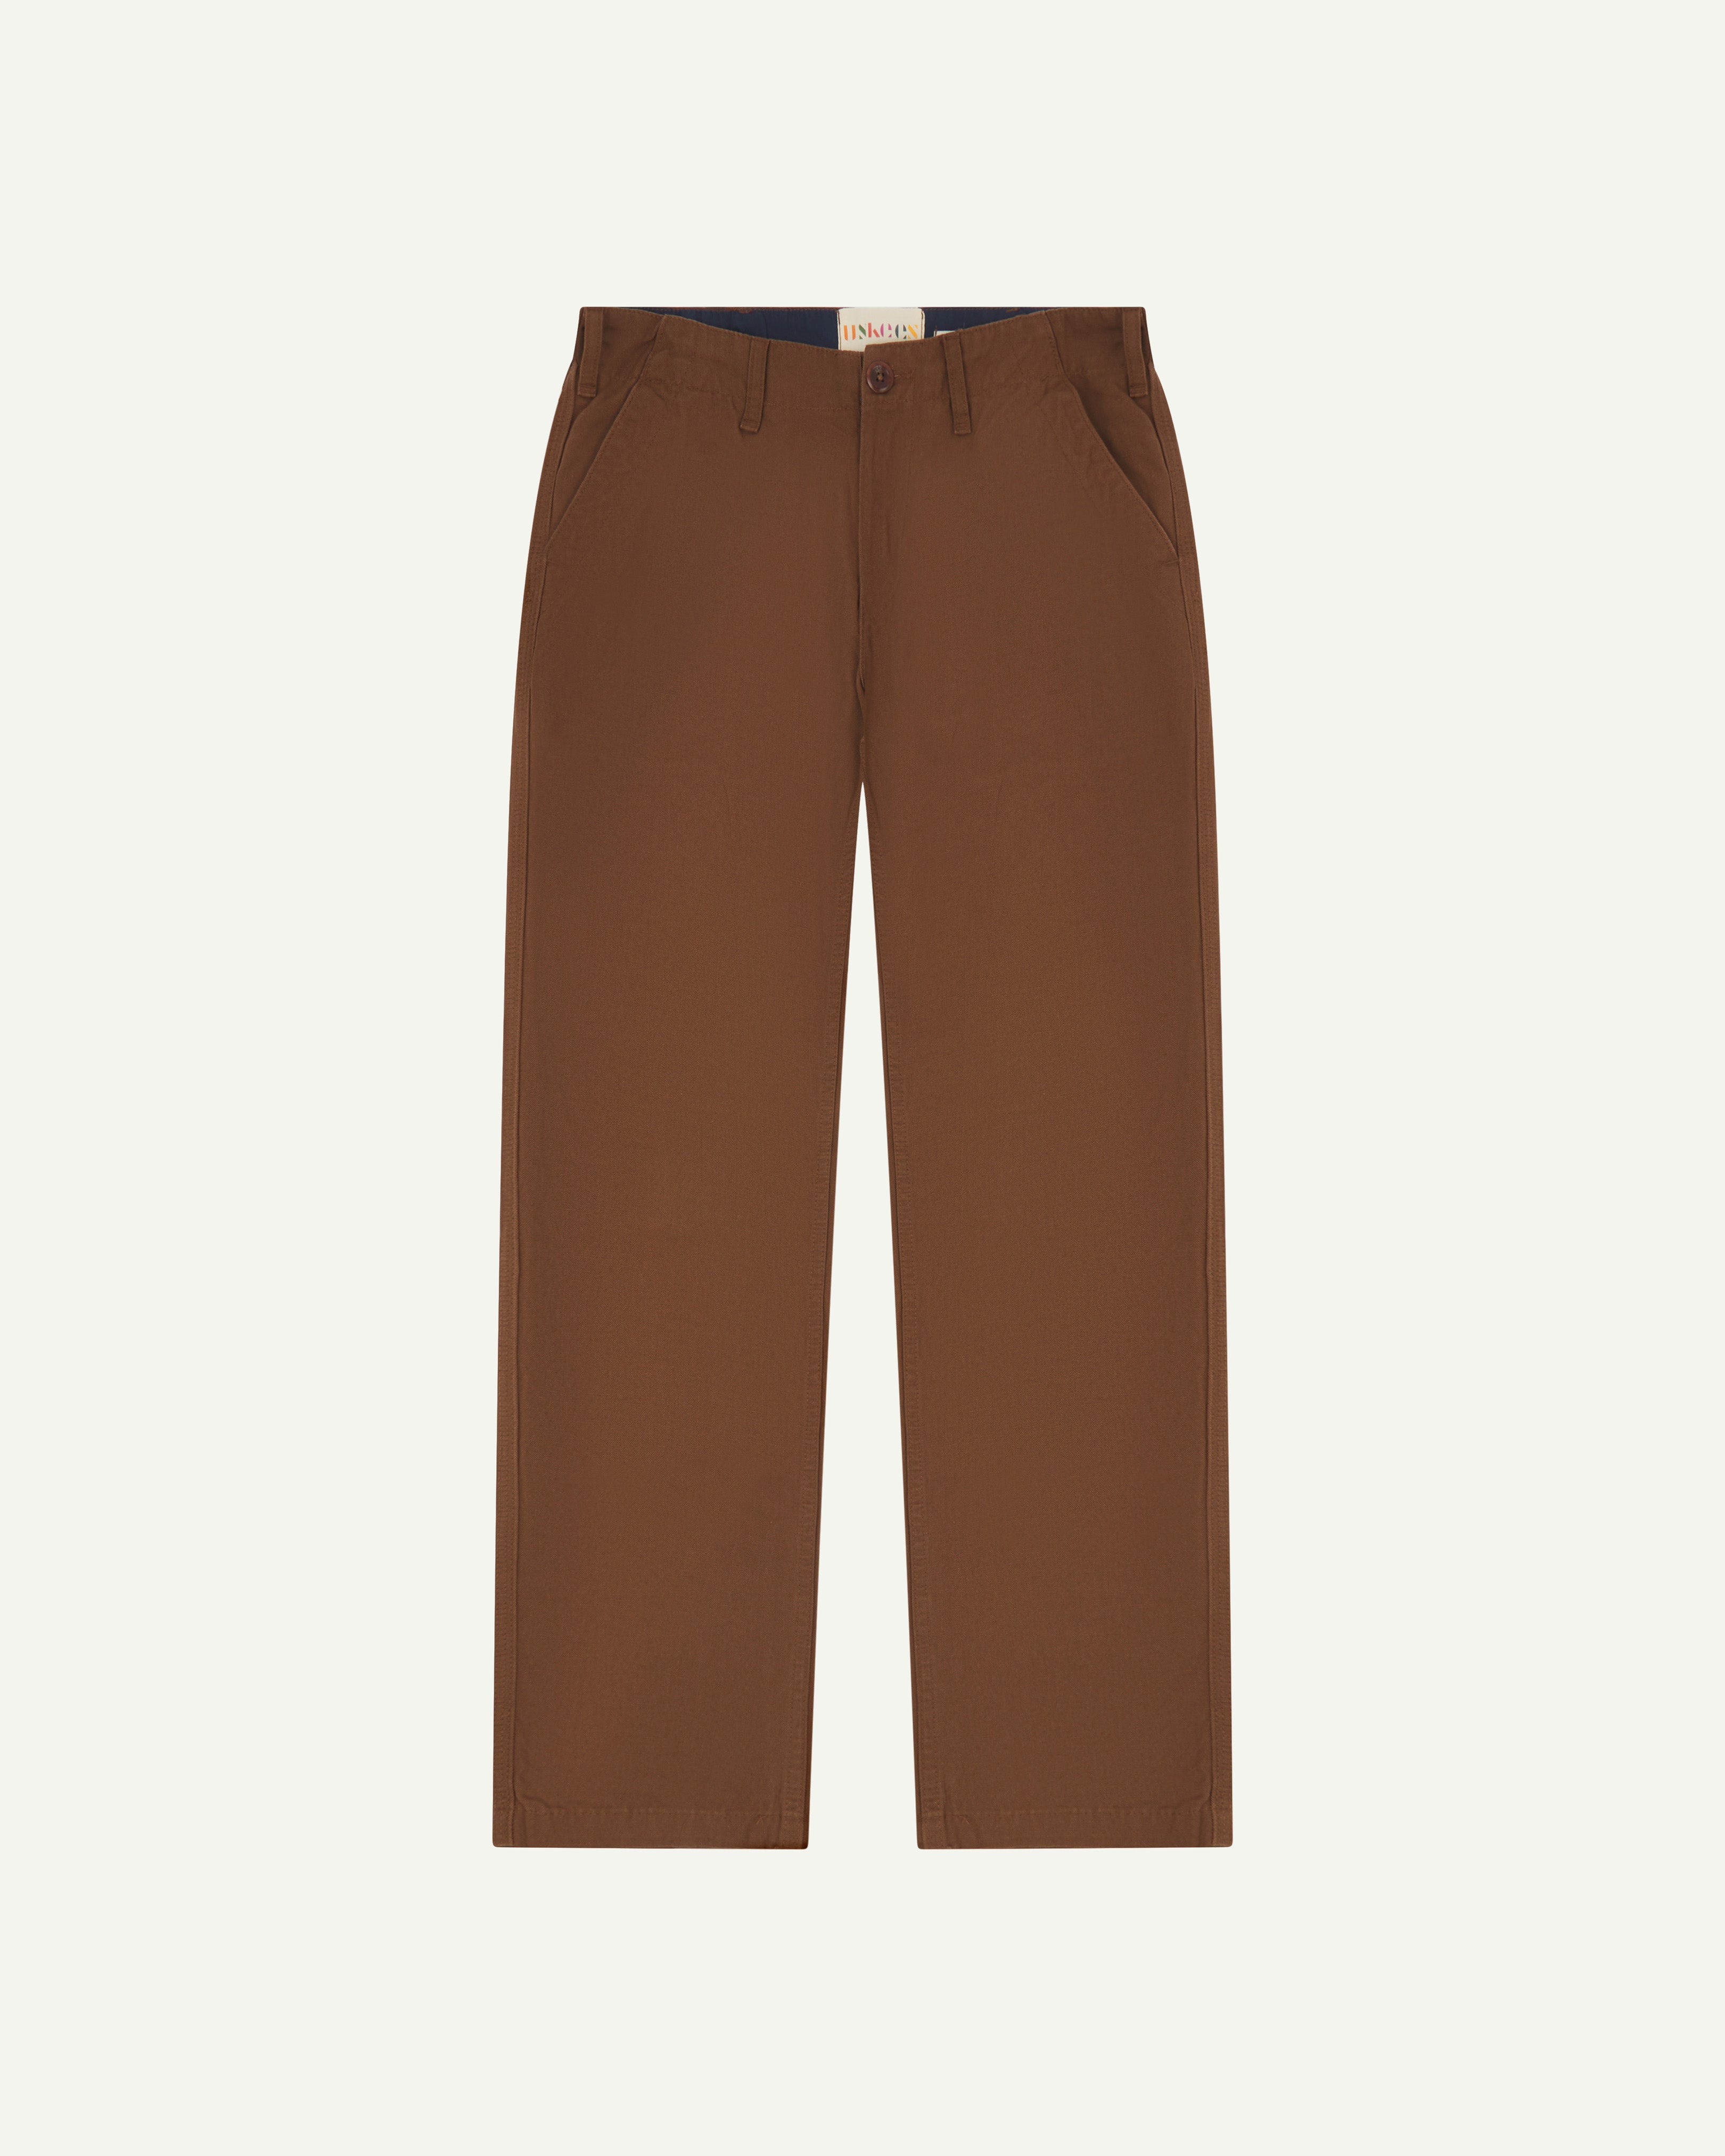 Men's Orange Pants Outfits-35 Best Ways to Wear Orange Pants | Orange pants  outfit, Mens outfits, Mens colored pants